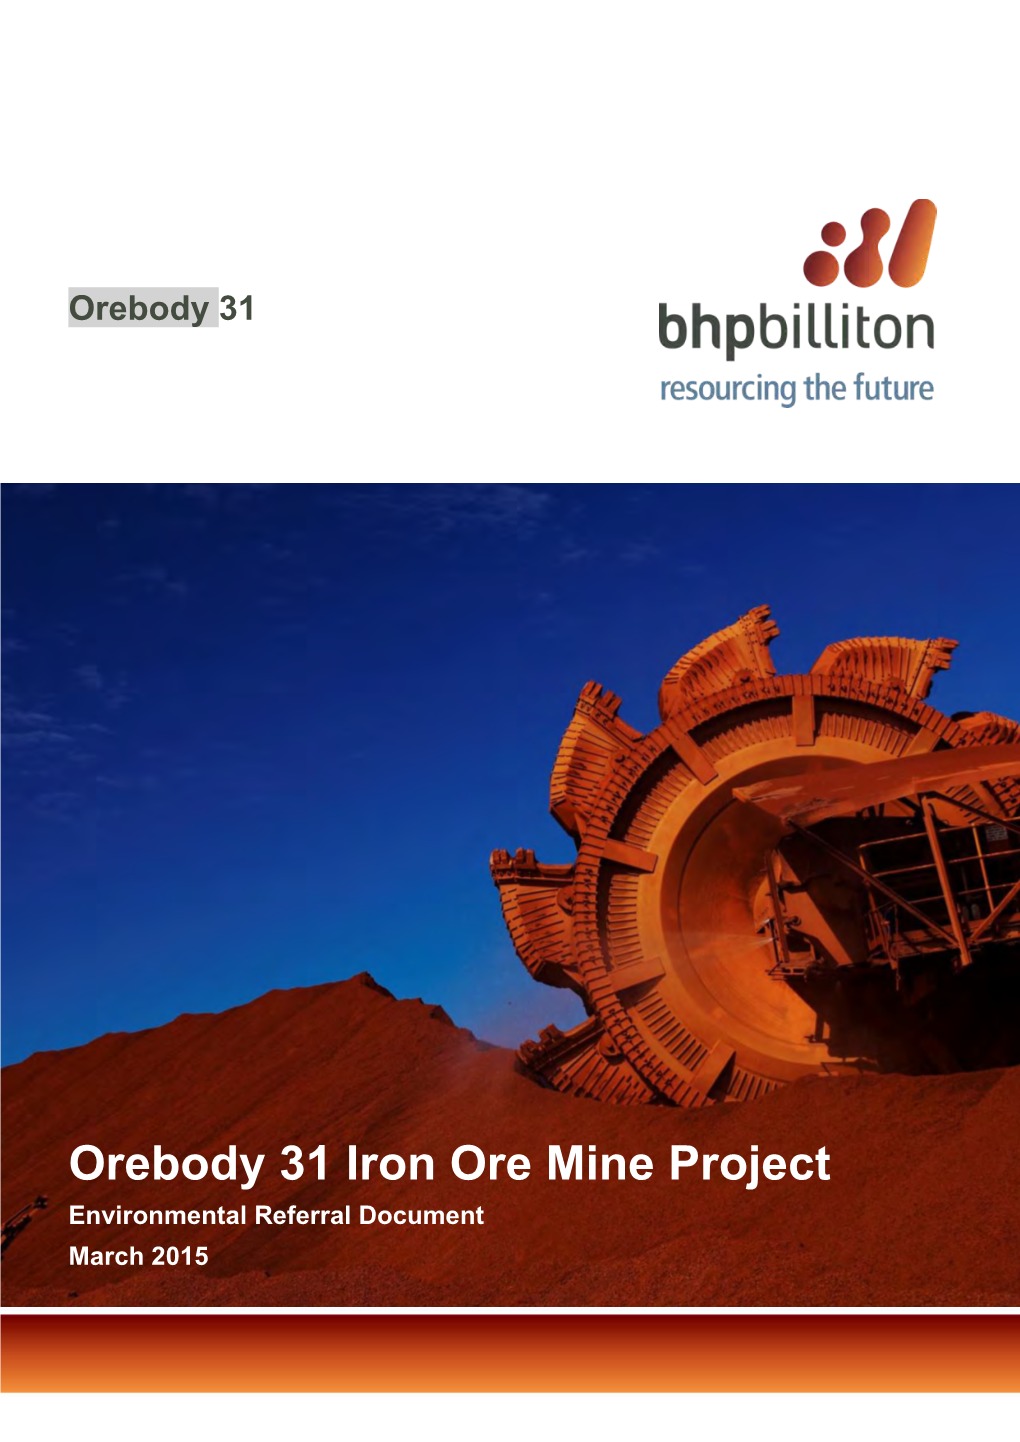 Orebody 31 Iron Ore Mine Project Environmental Referral Document March 2015